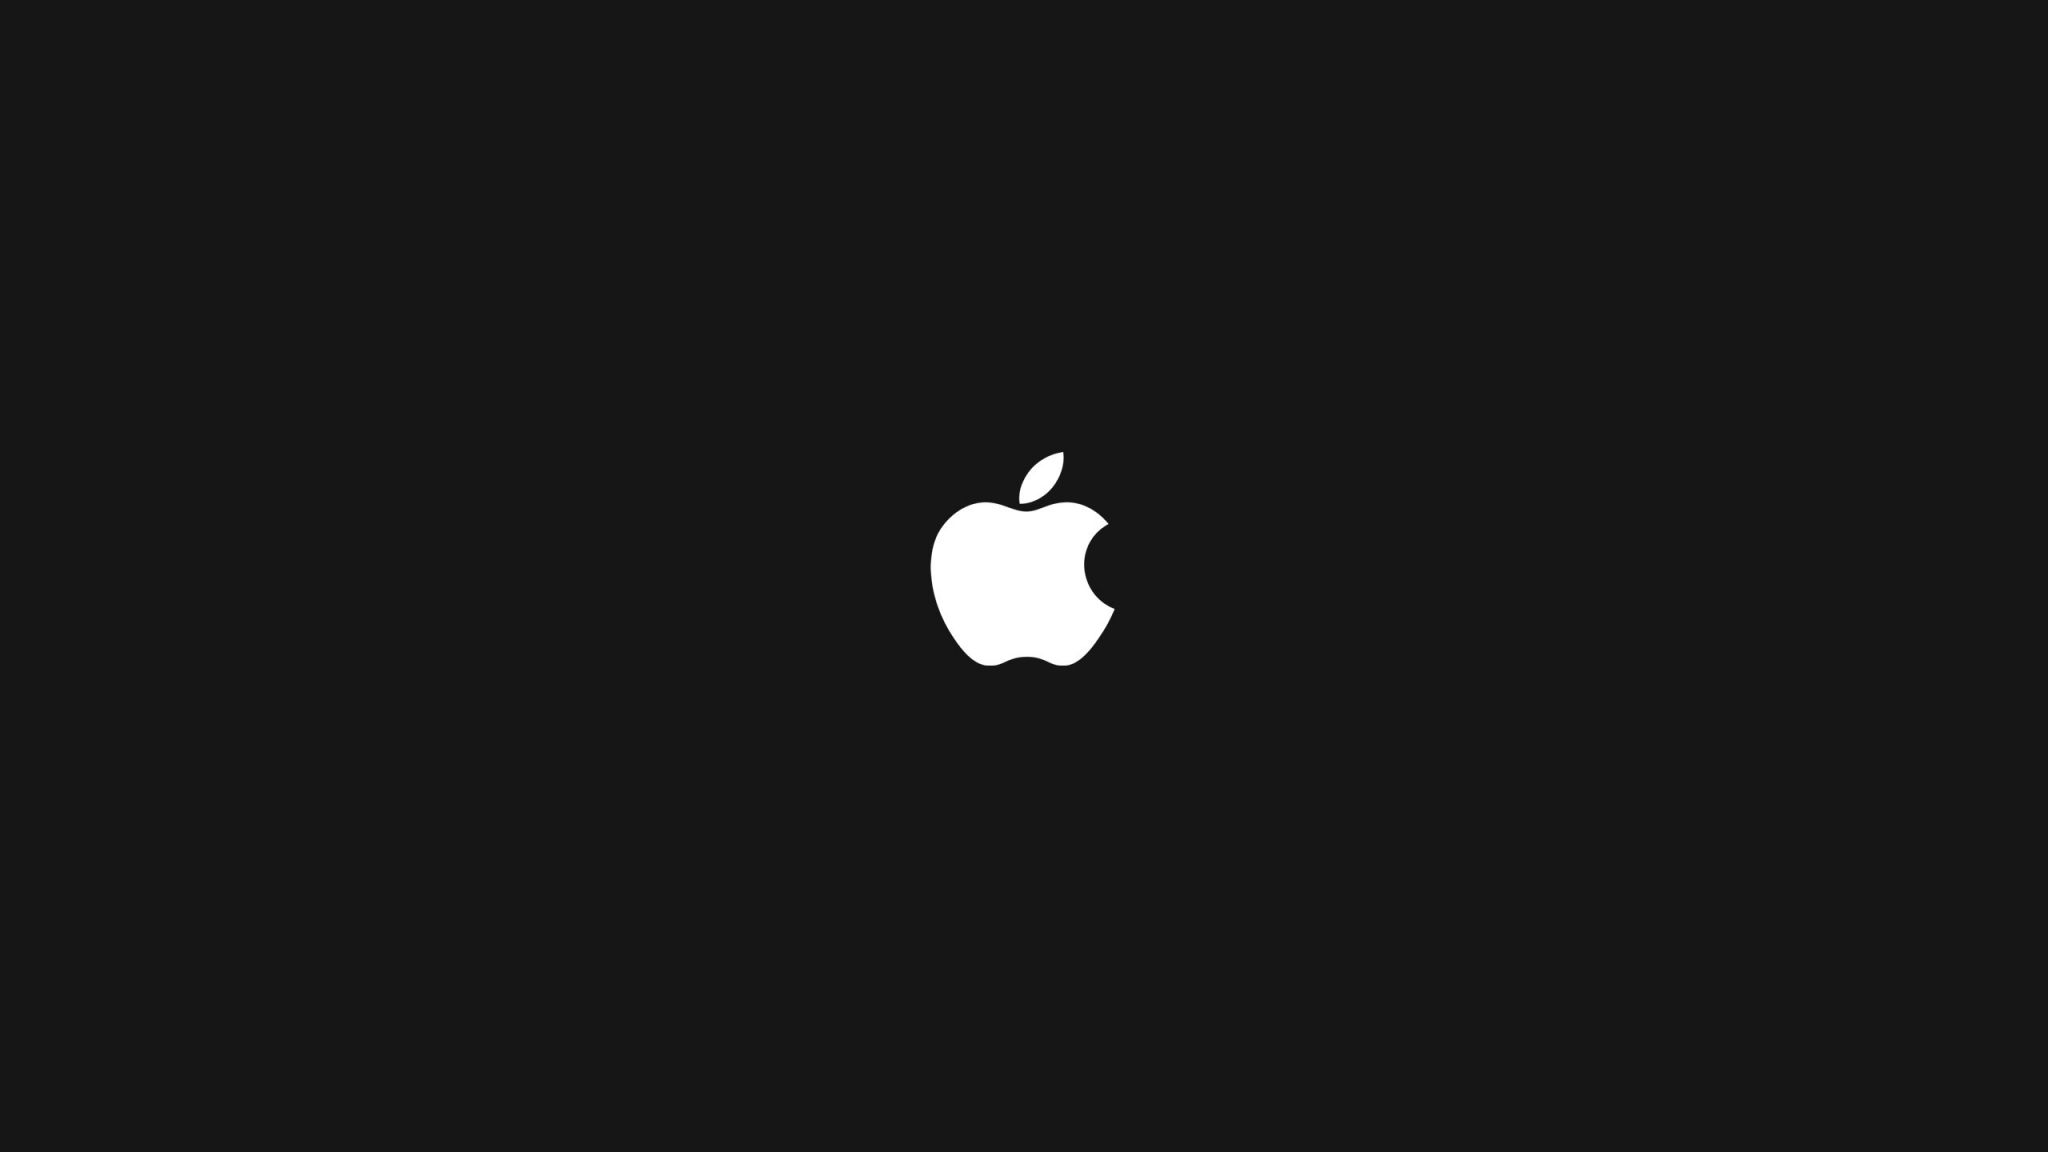 apple HD widescreen wallpaper for laptop. Macbook air wallpaper, Apple logo wallpaper, Logo wallpaper hd